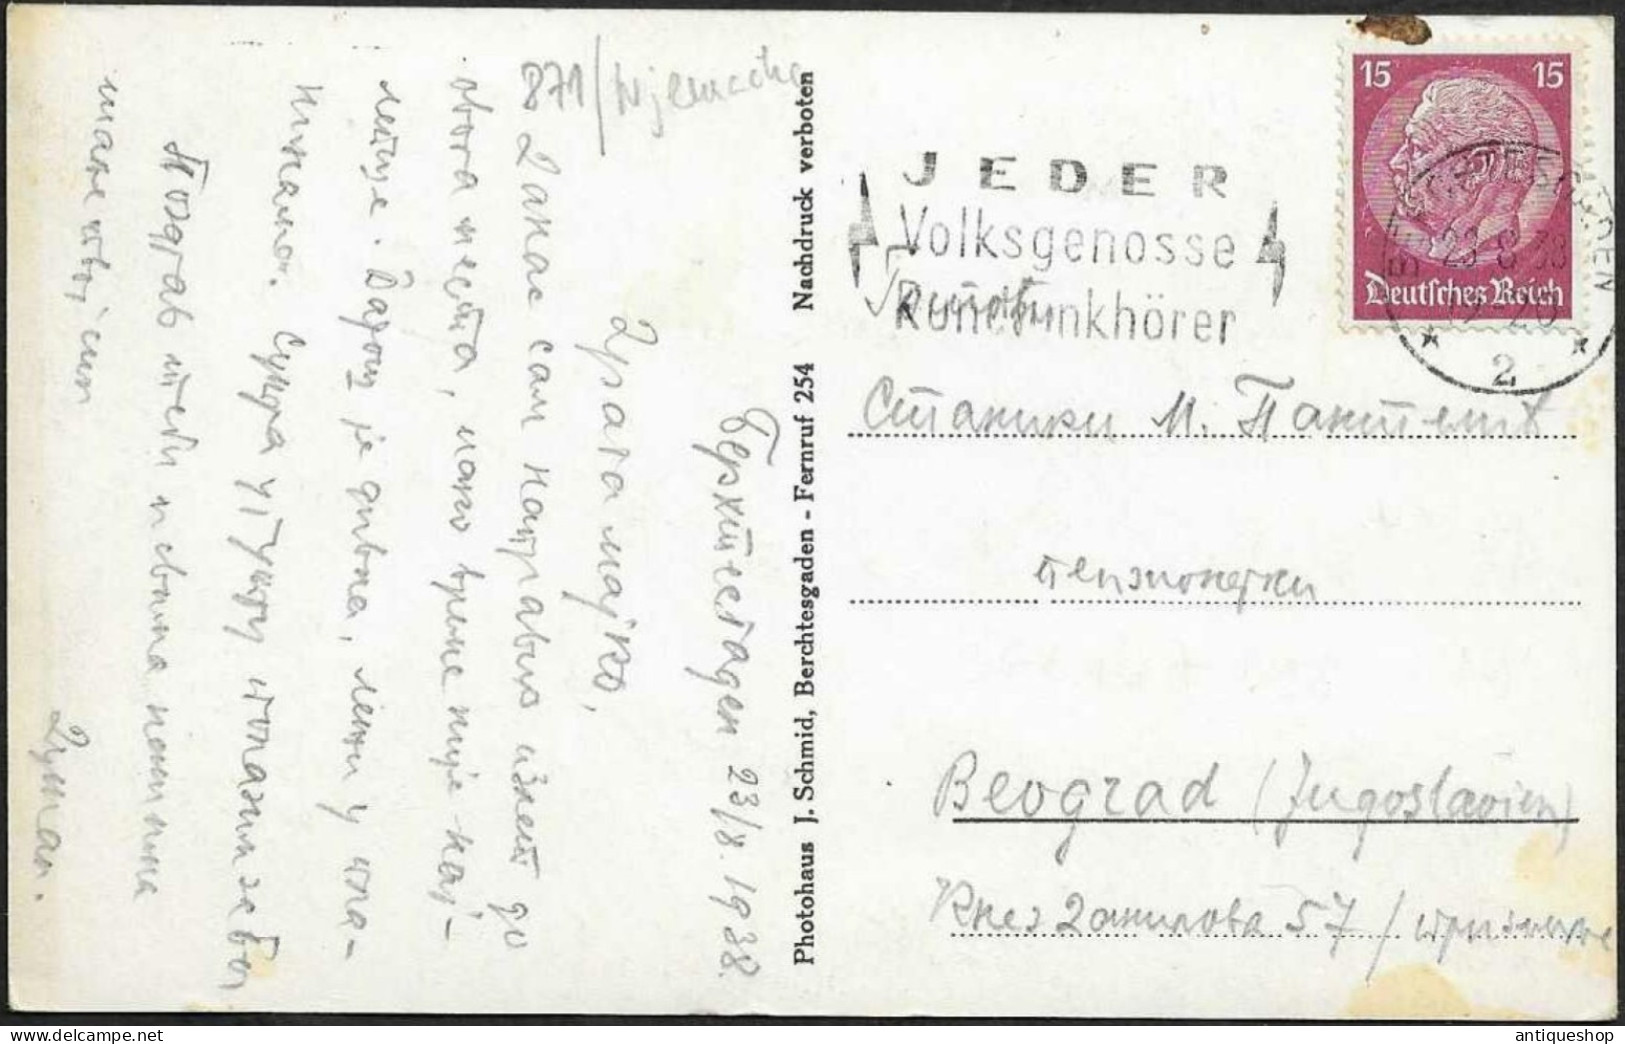 Germany-----Berchtesgaden Mit Watzmann-----old Postcard - Berchtesgaden